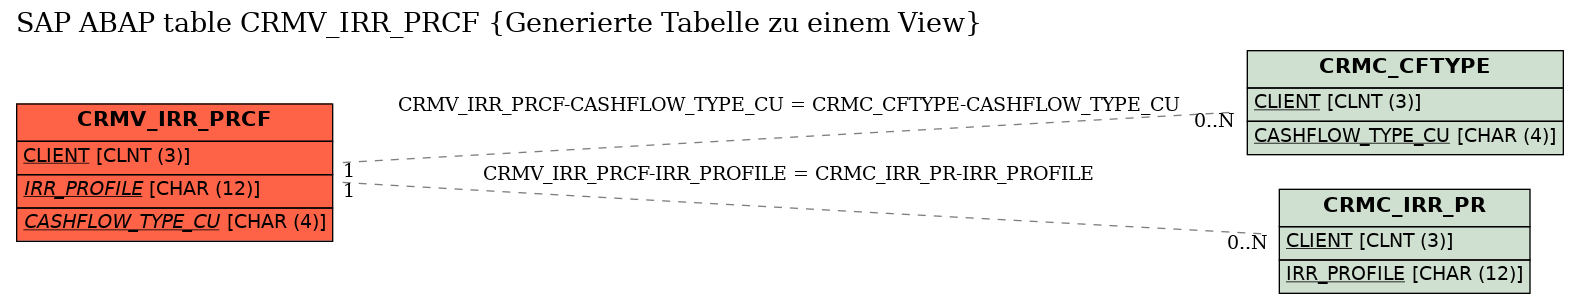 E-R Diagram for table CRMV_IRR_PRCF (Generierte Tabelle zu einem View)